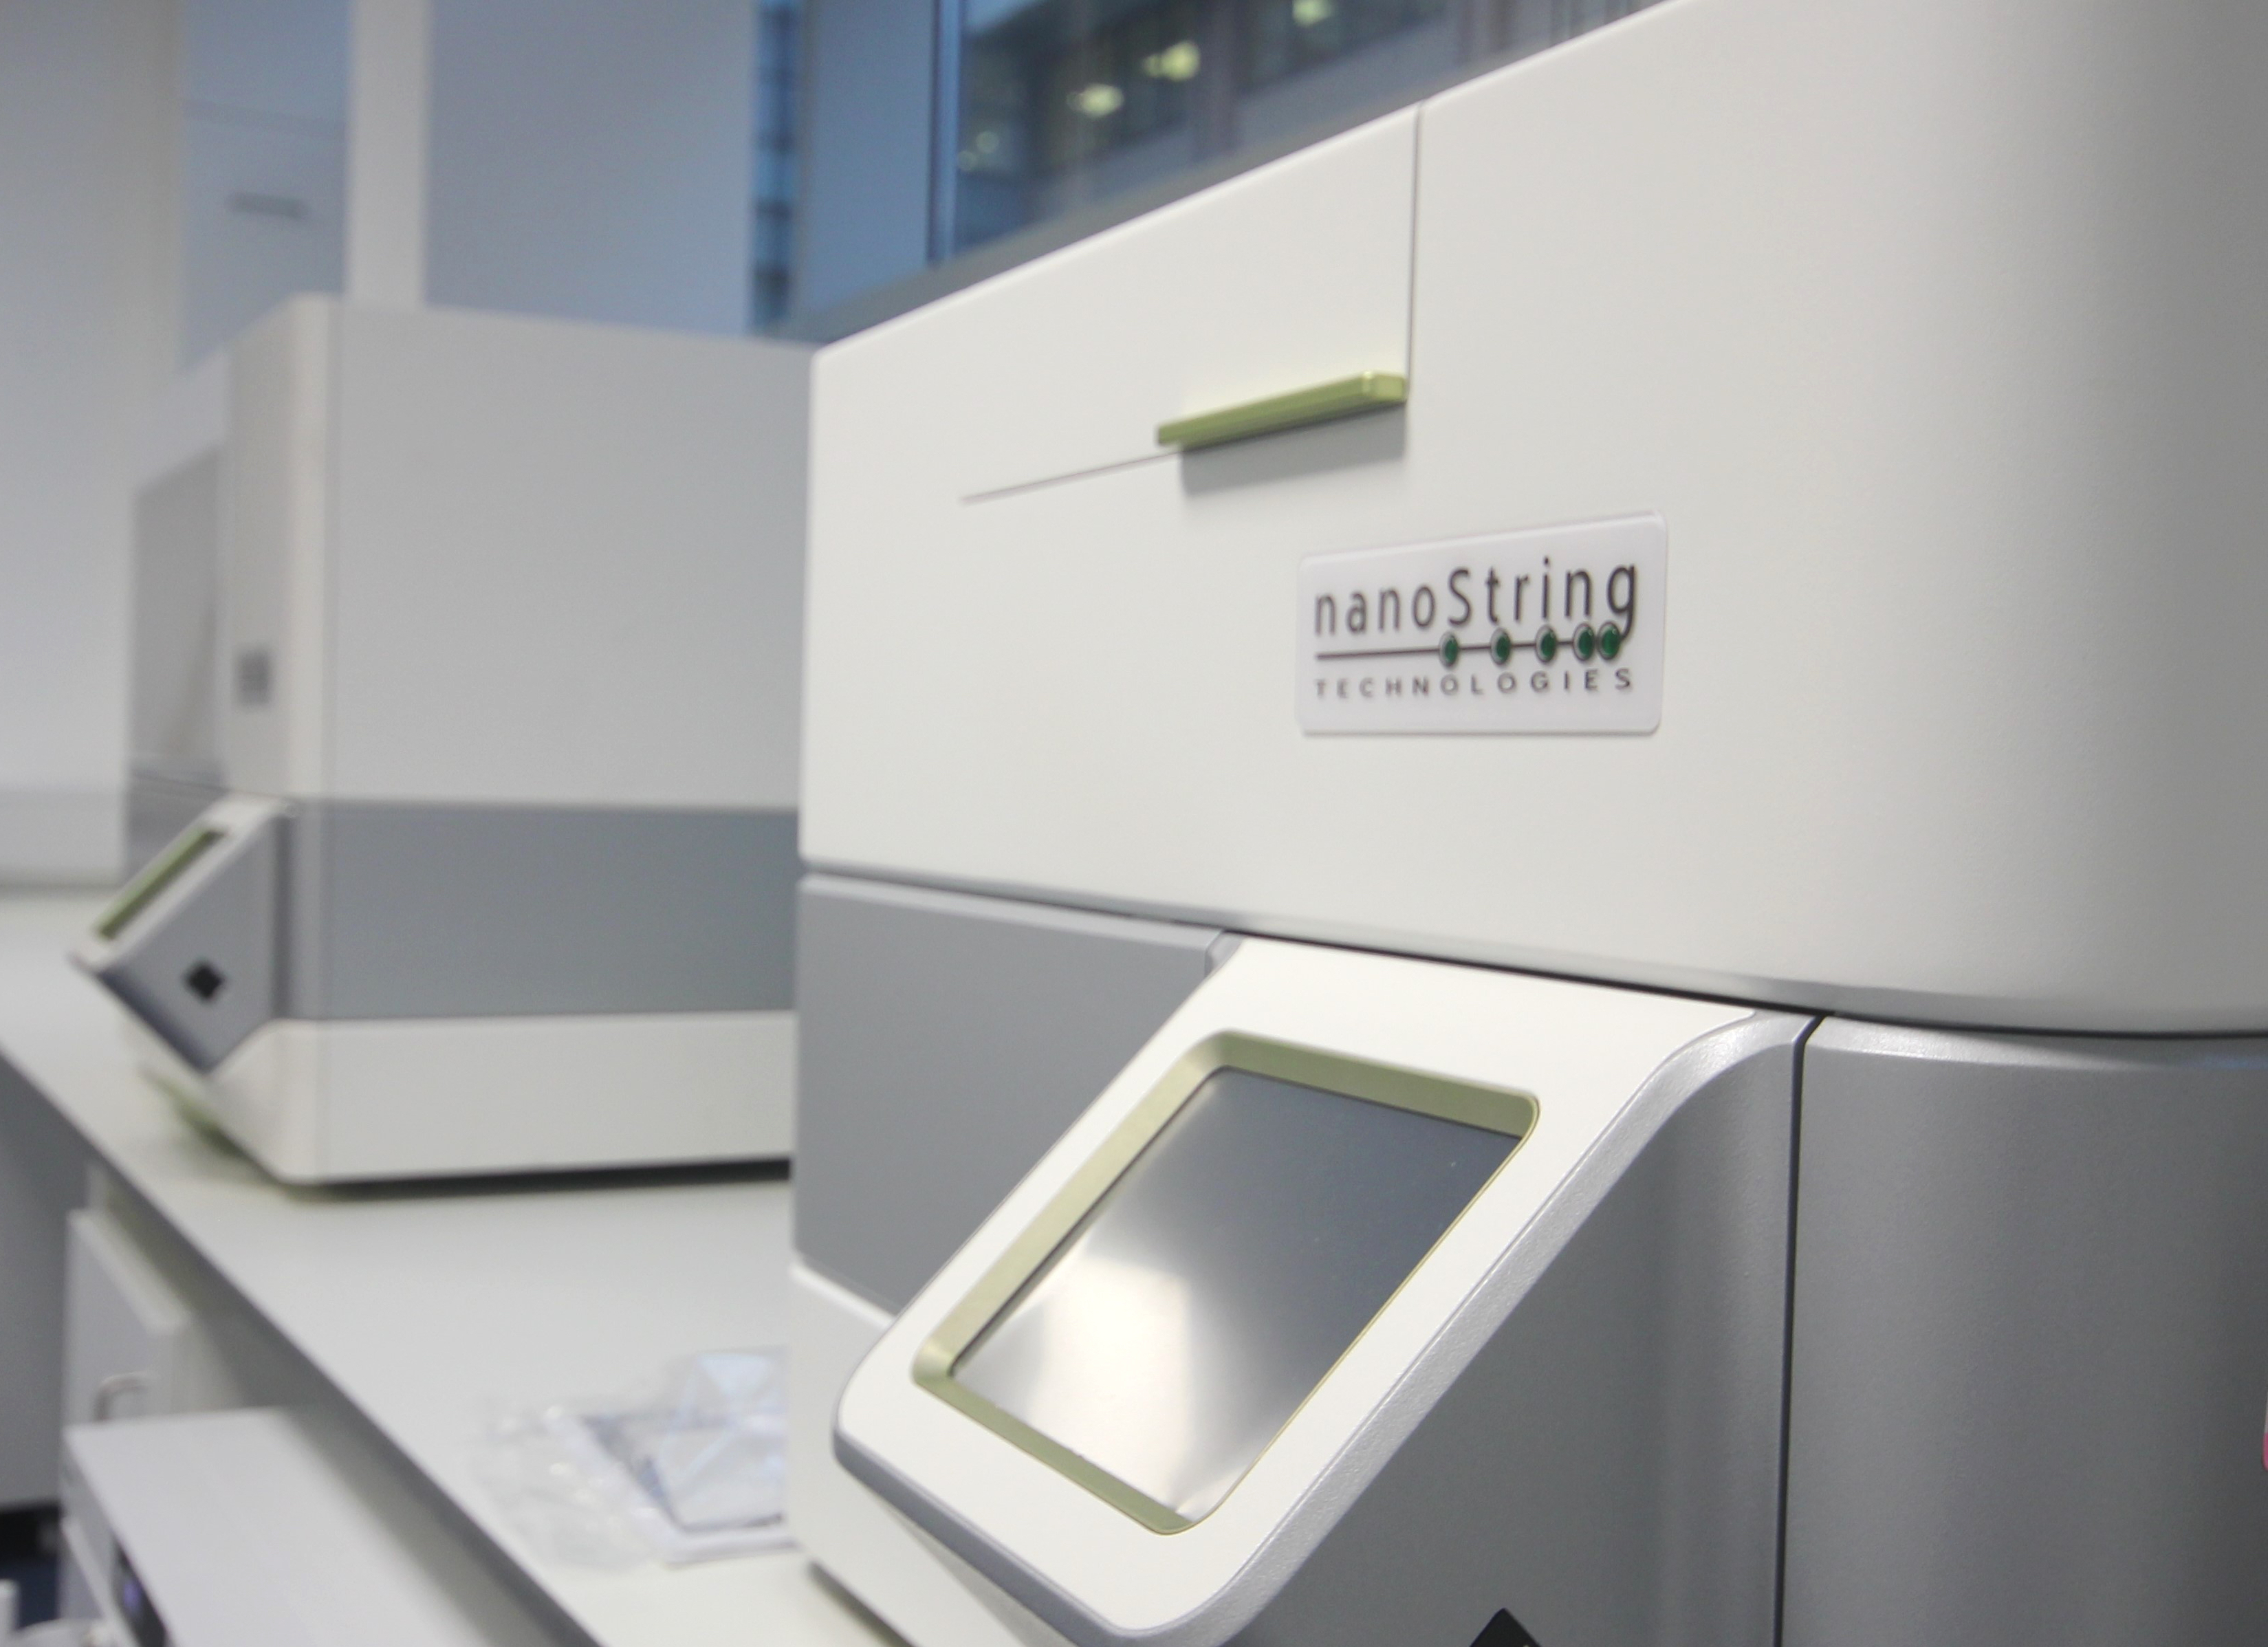 Photo of NanoString nCounter analysis system